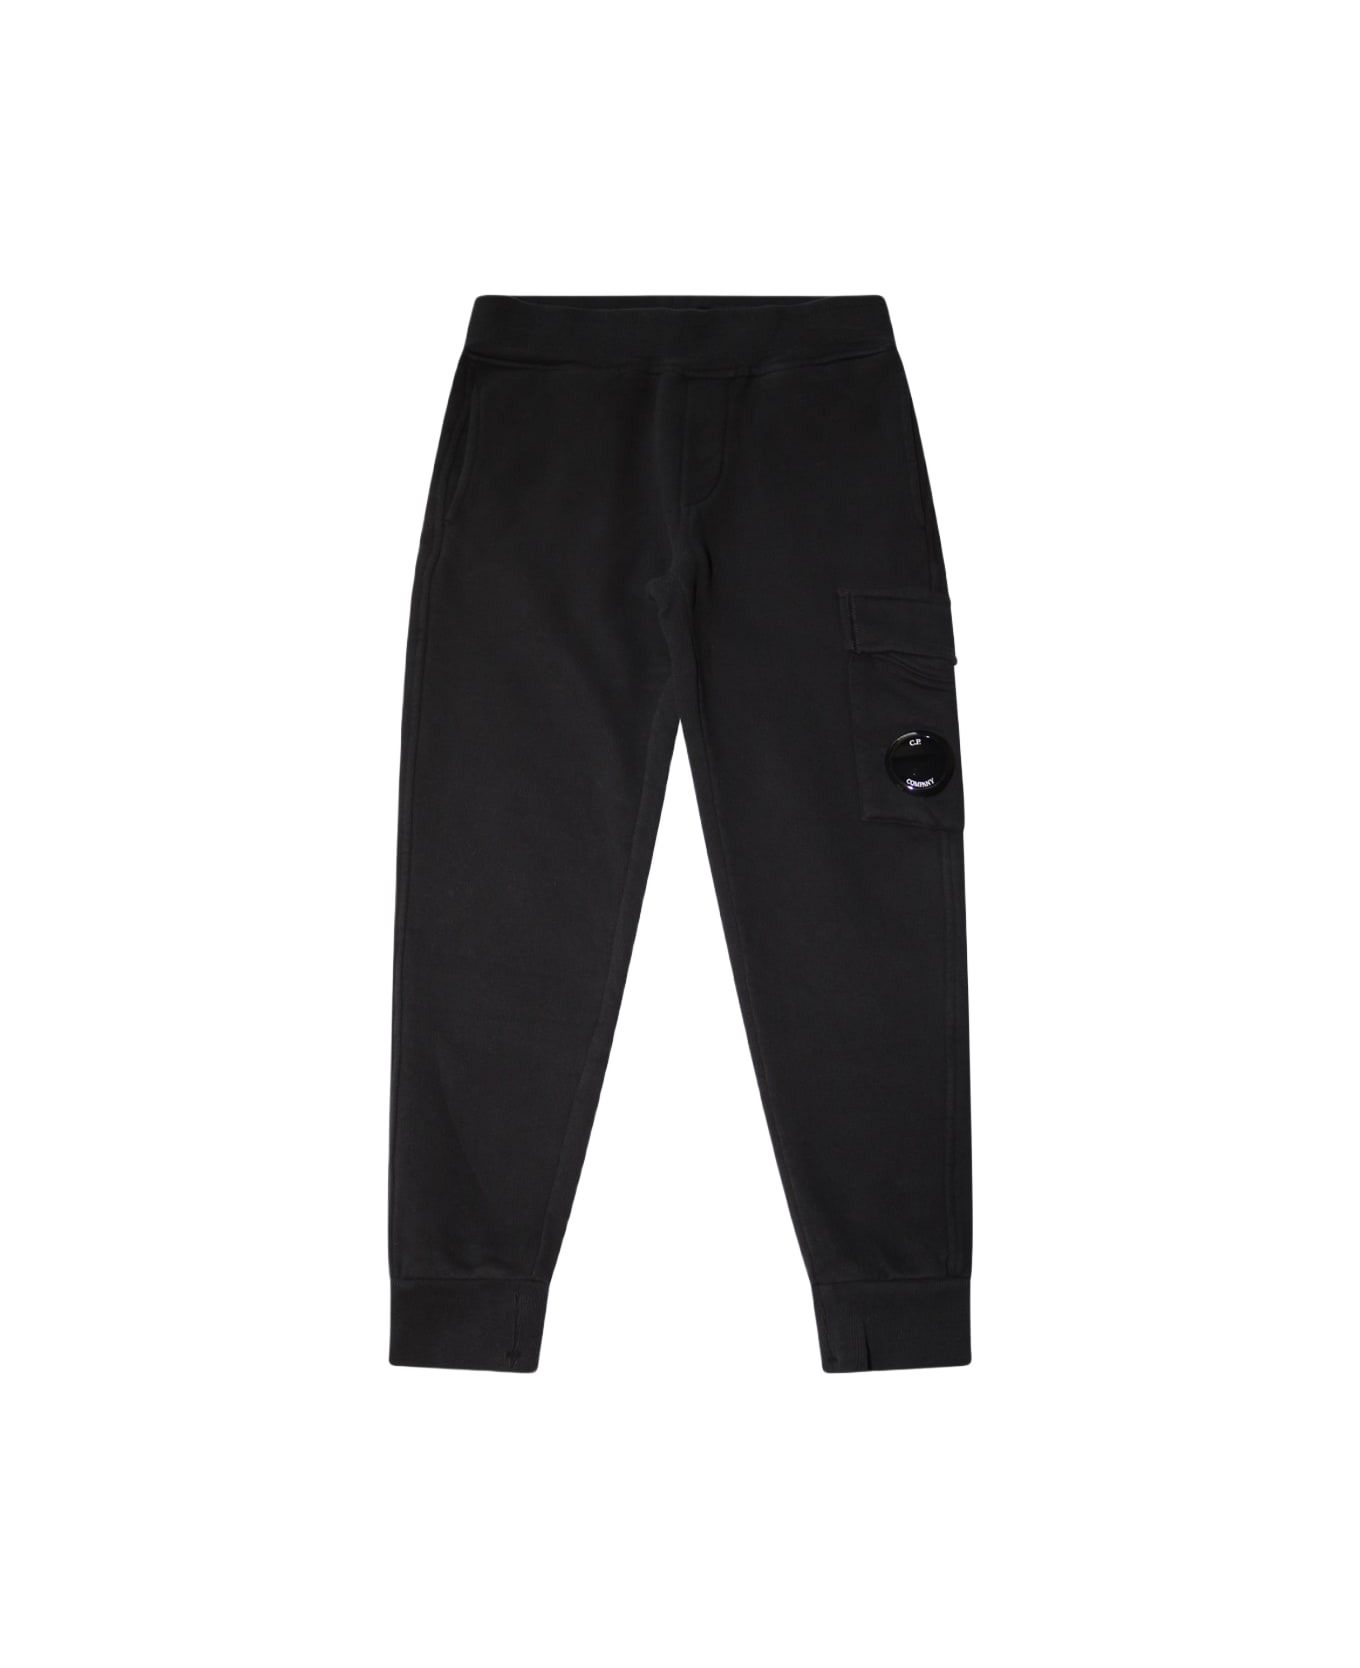 C.P. Company Undersixteen Black Cotton Pants - Nero/Black